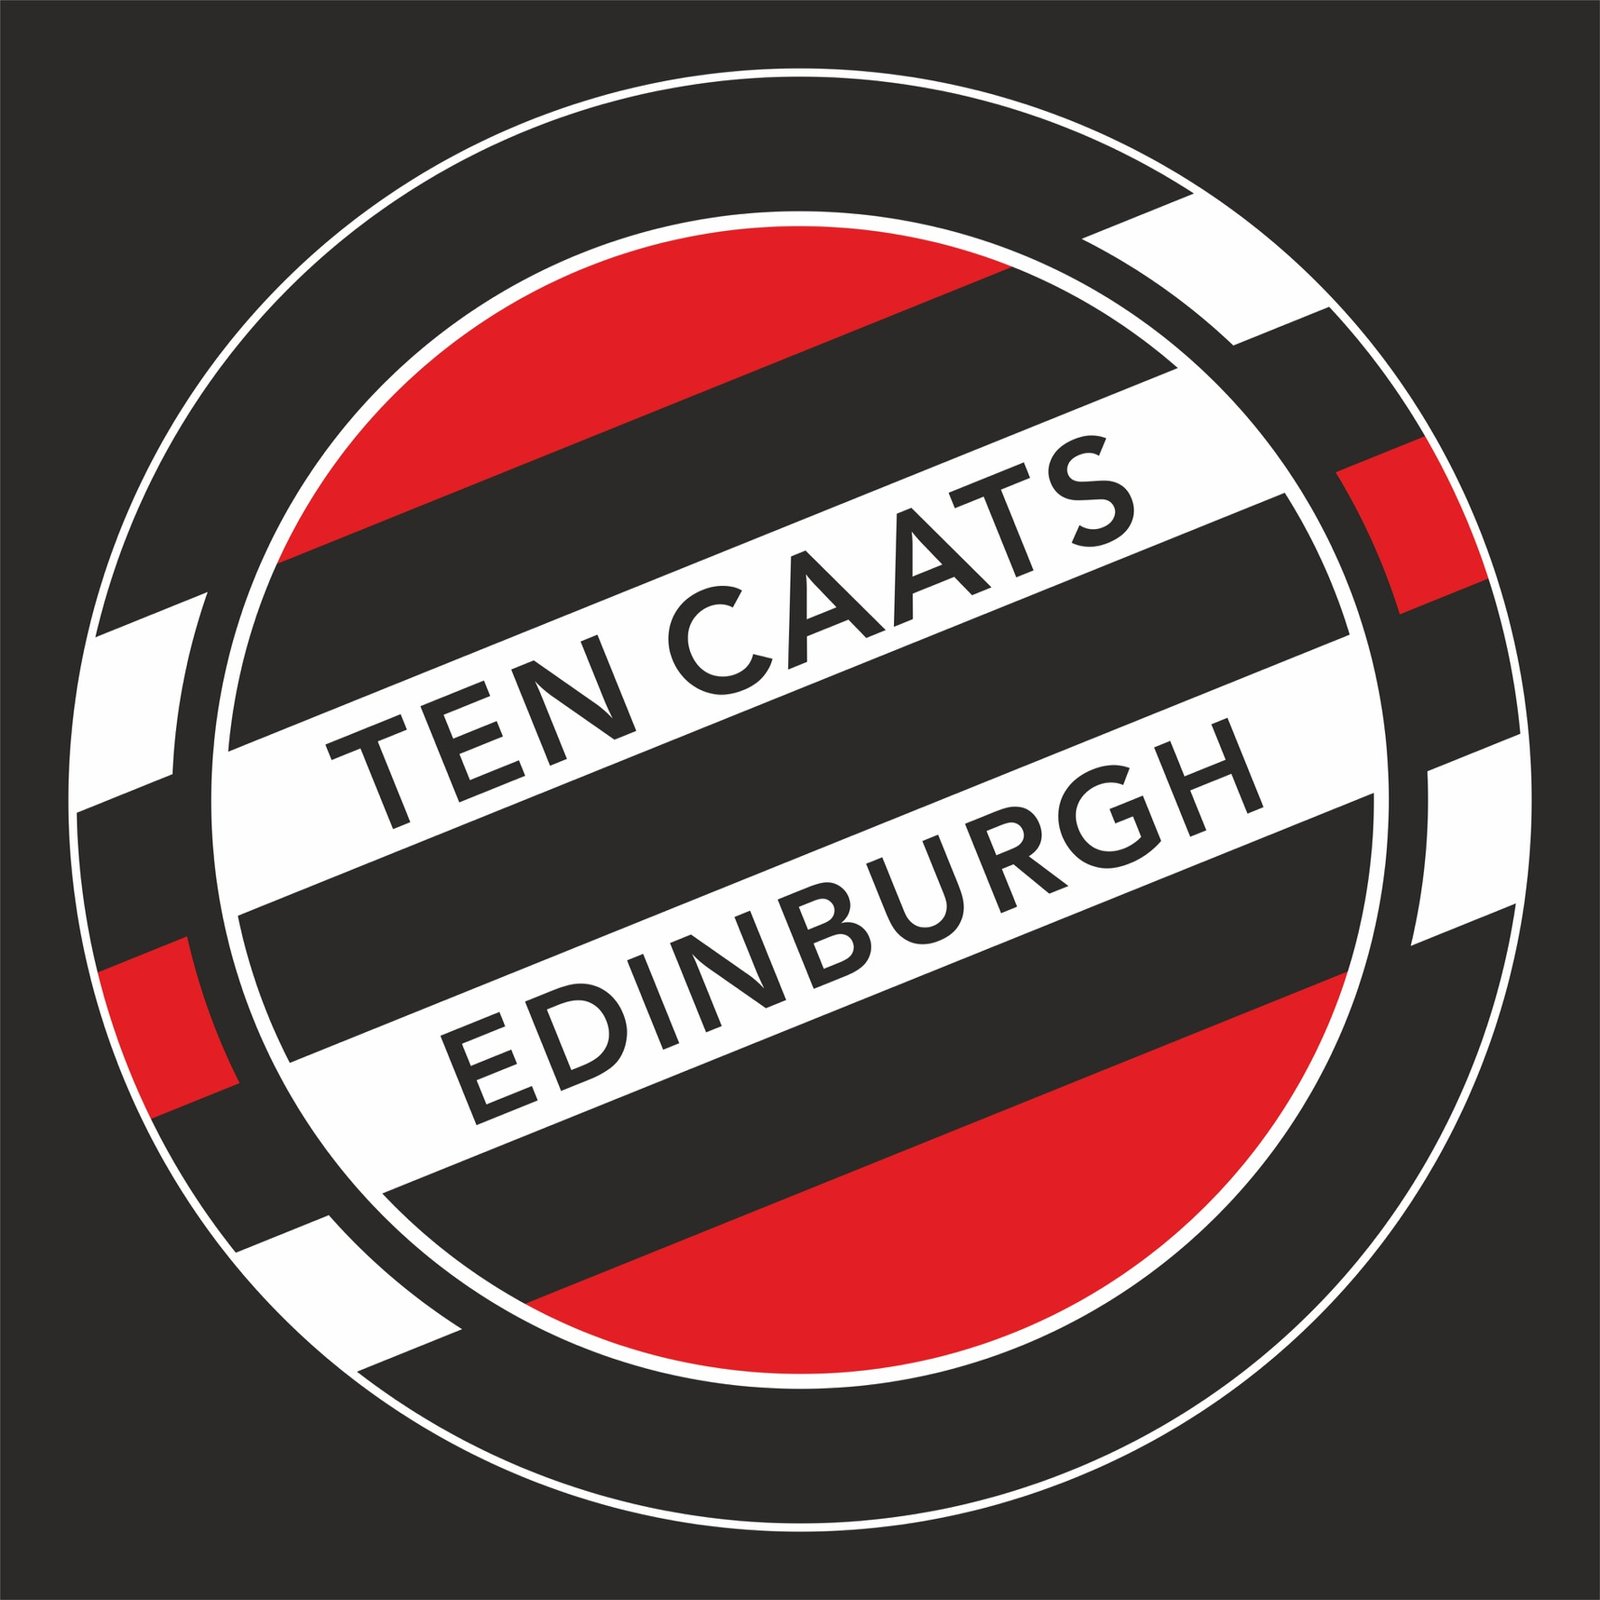 Ten Caats Edinburgh